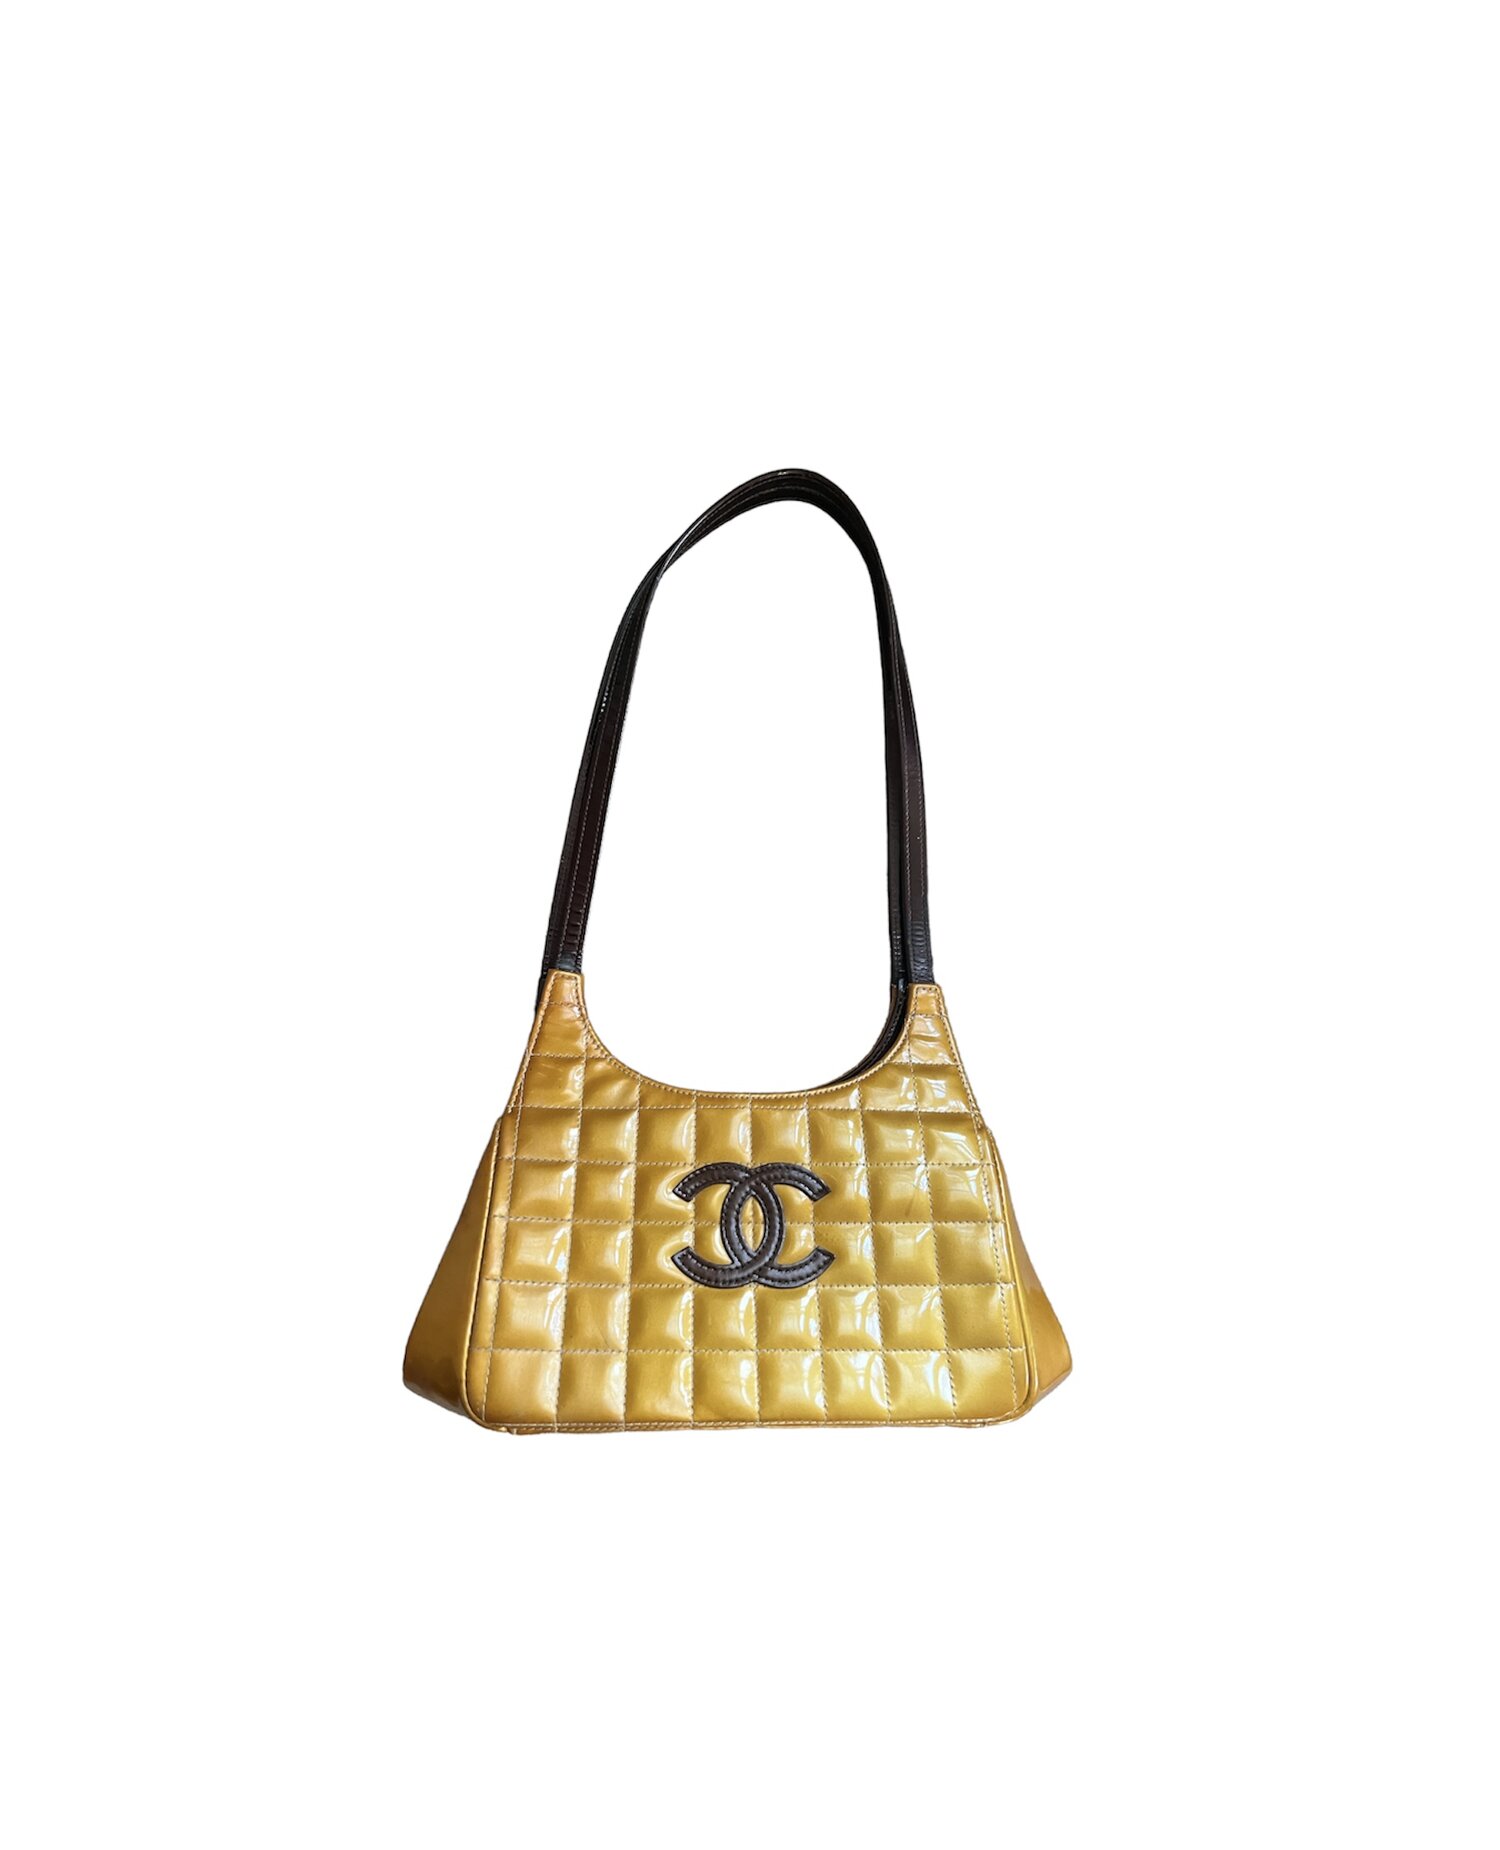 Chanel handbag ladies chocolate - Gem